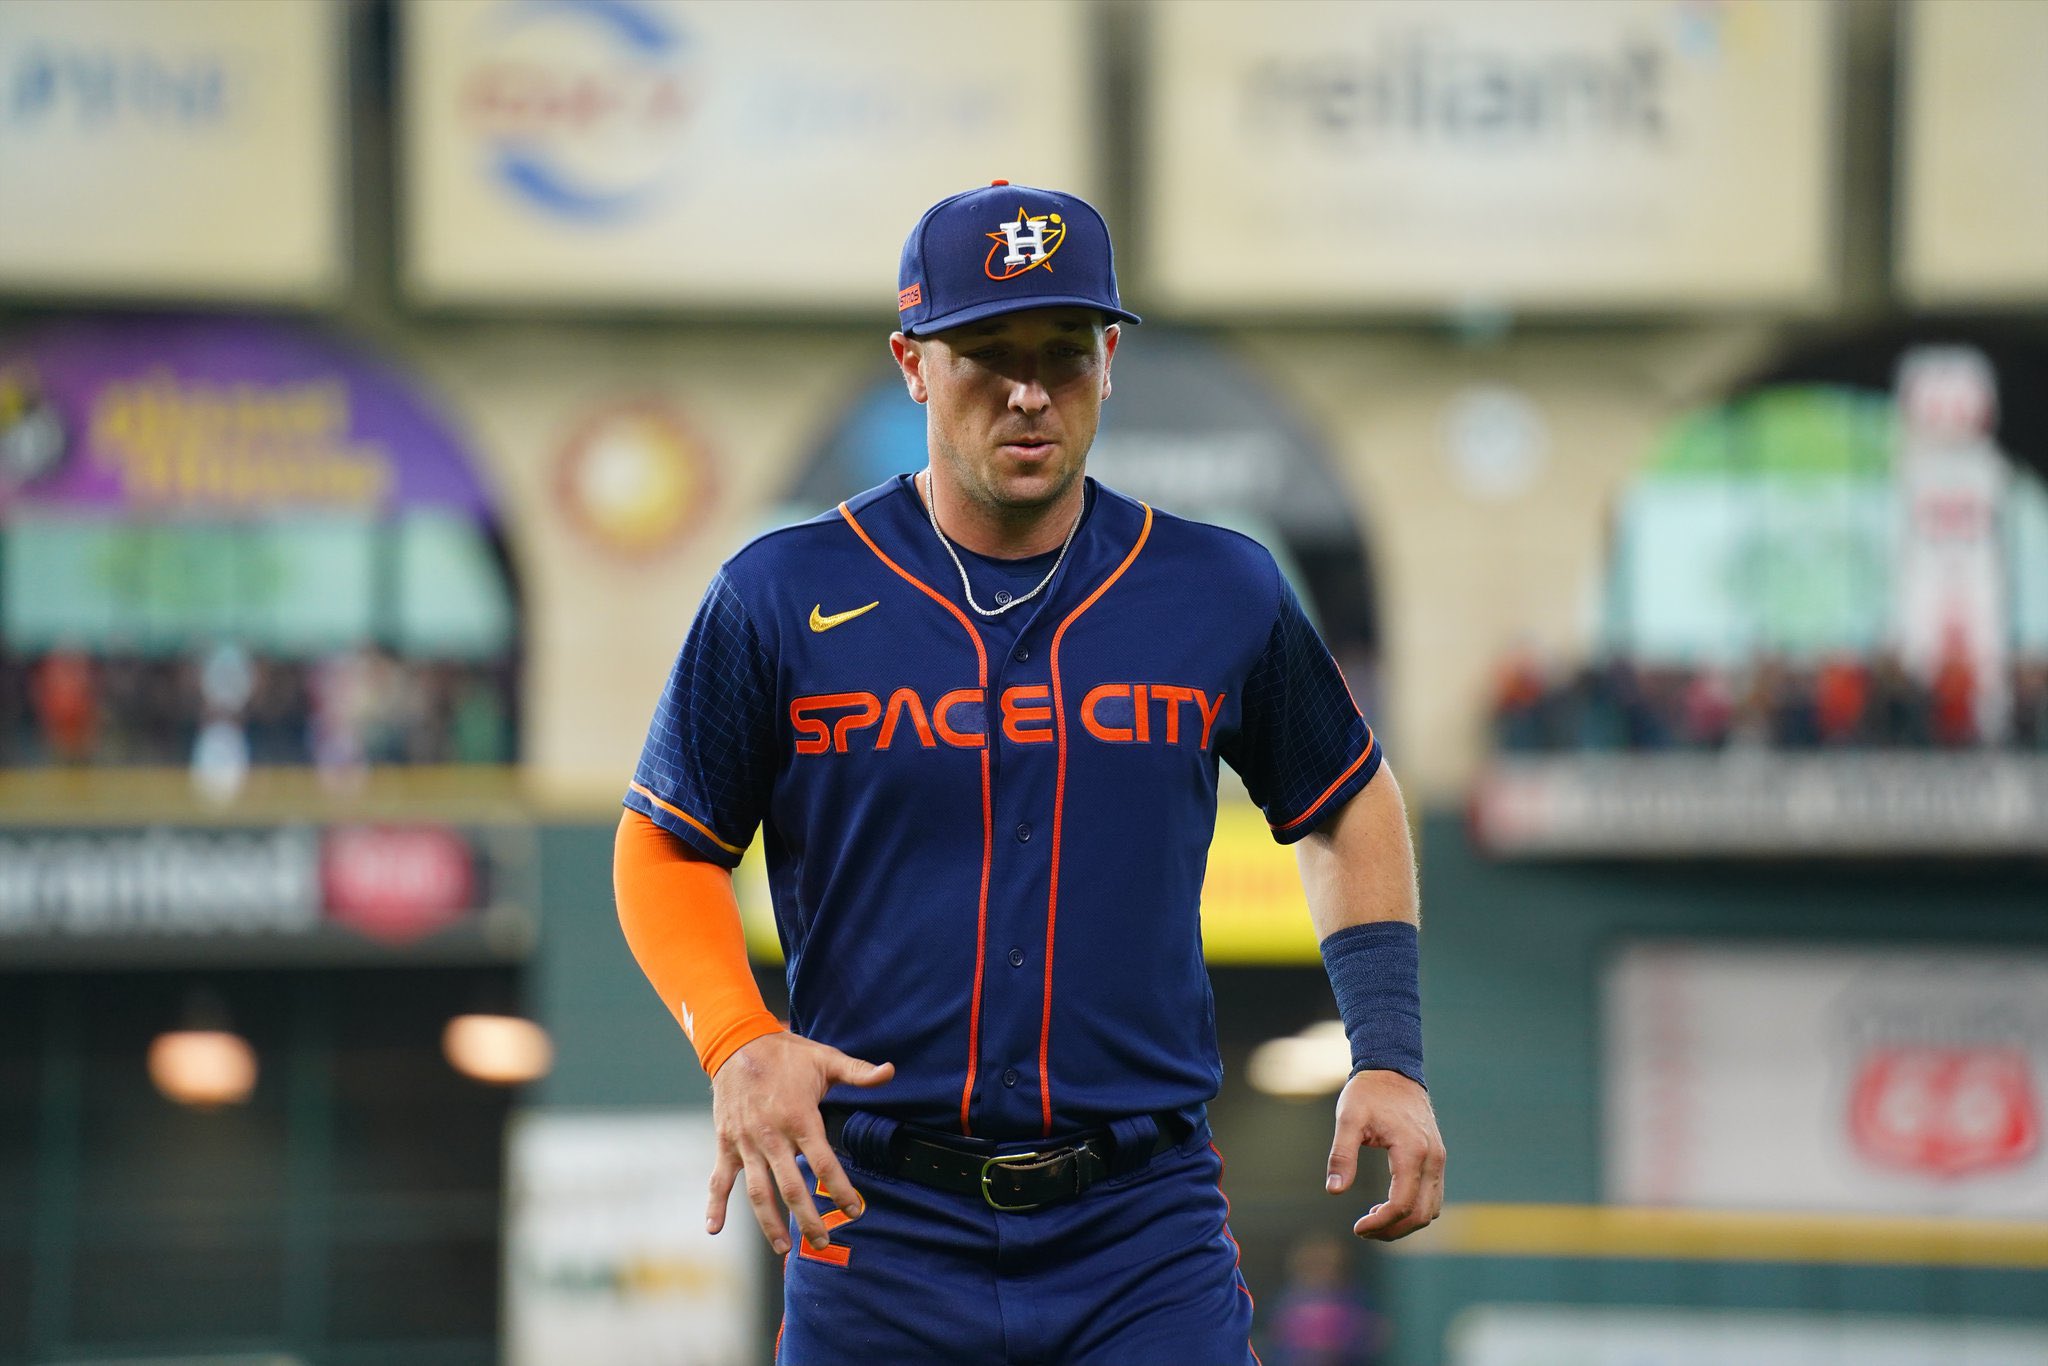 Stadium en X: The Astros are debuting their Space City uniforms